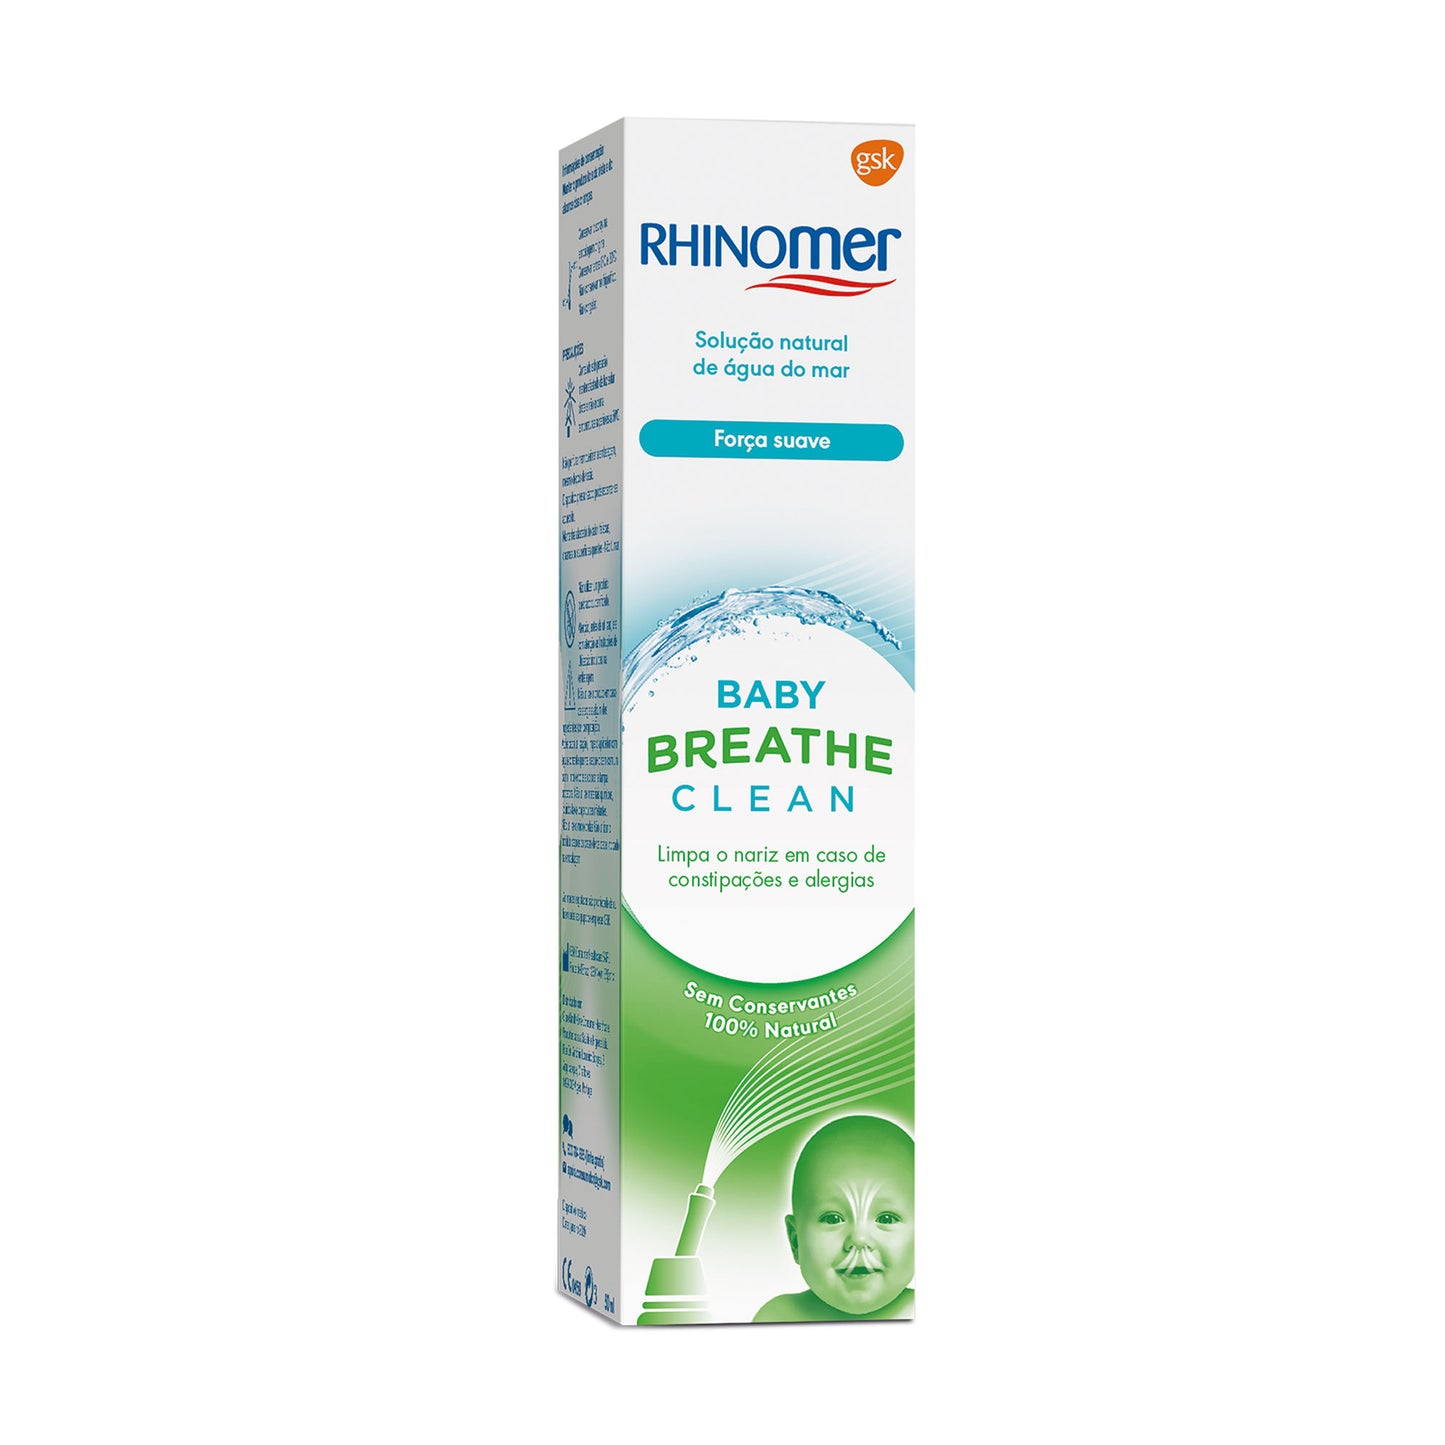 Rhinomer Baby Breathe Clean Força Suave - 50ml